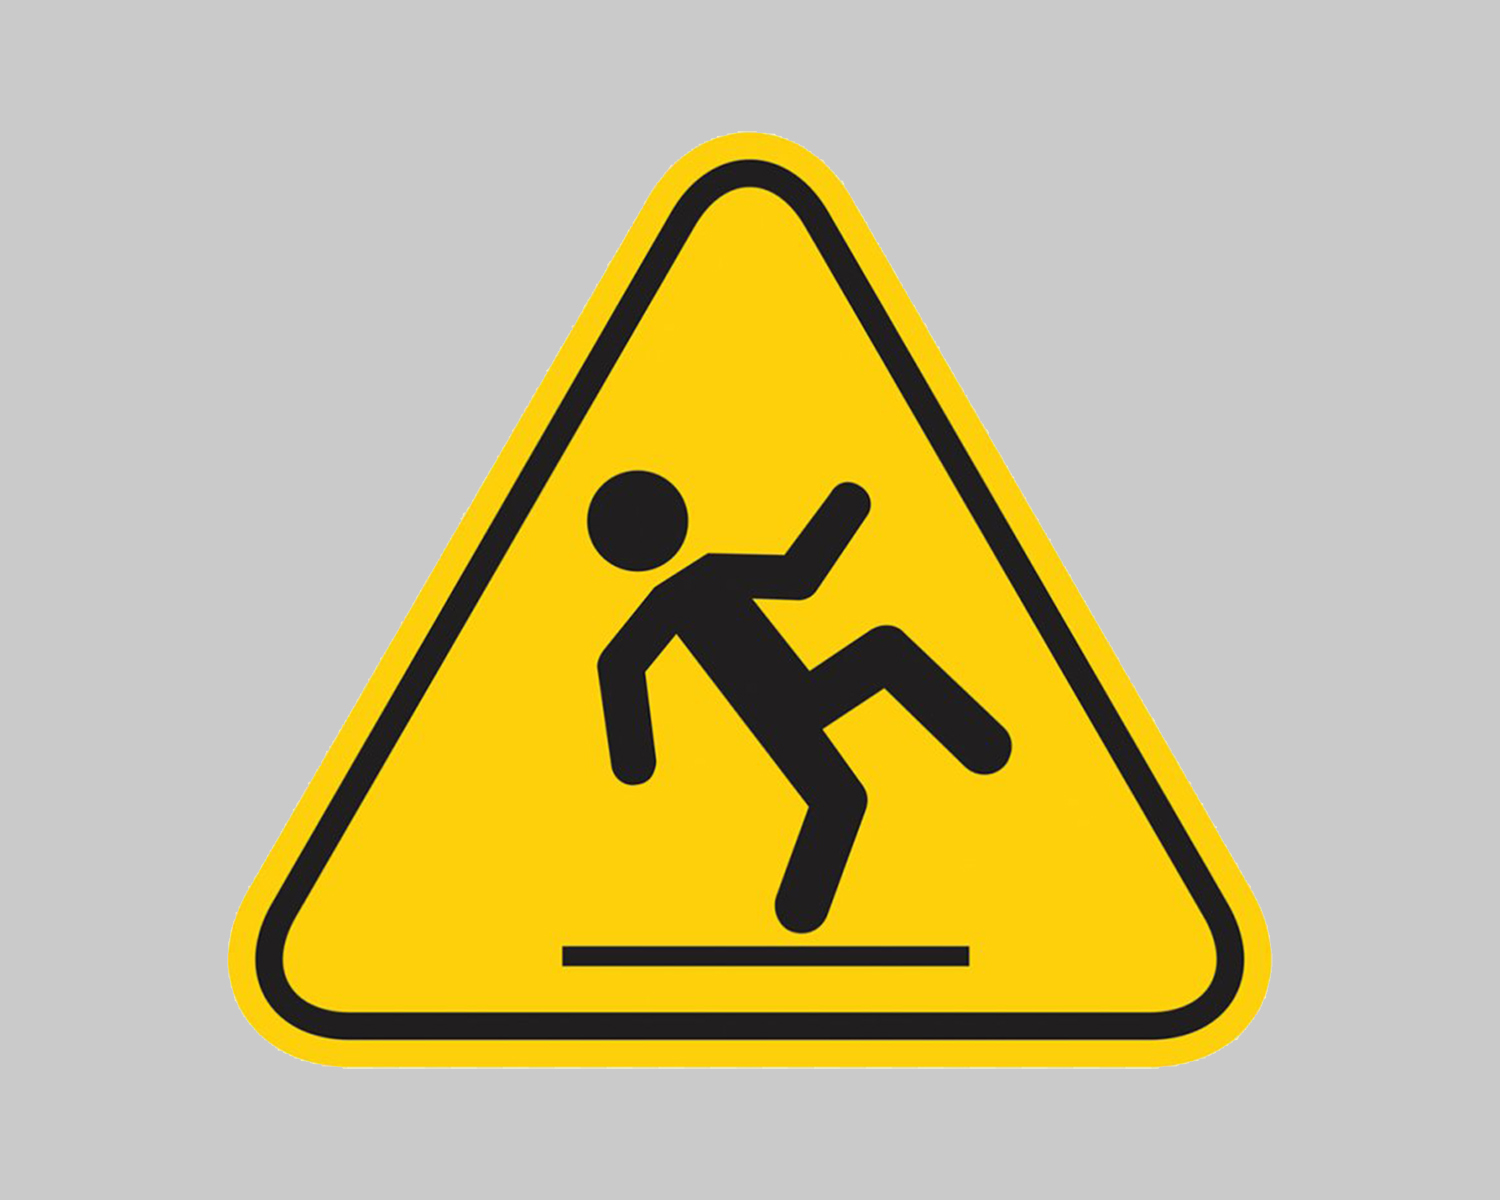 Careful of falling sign